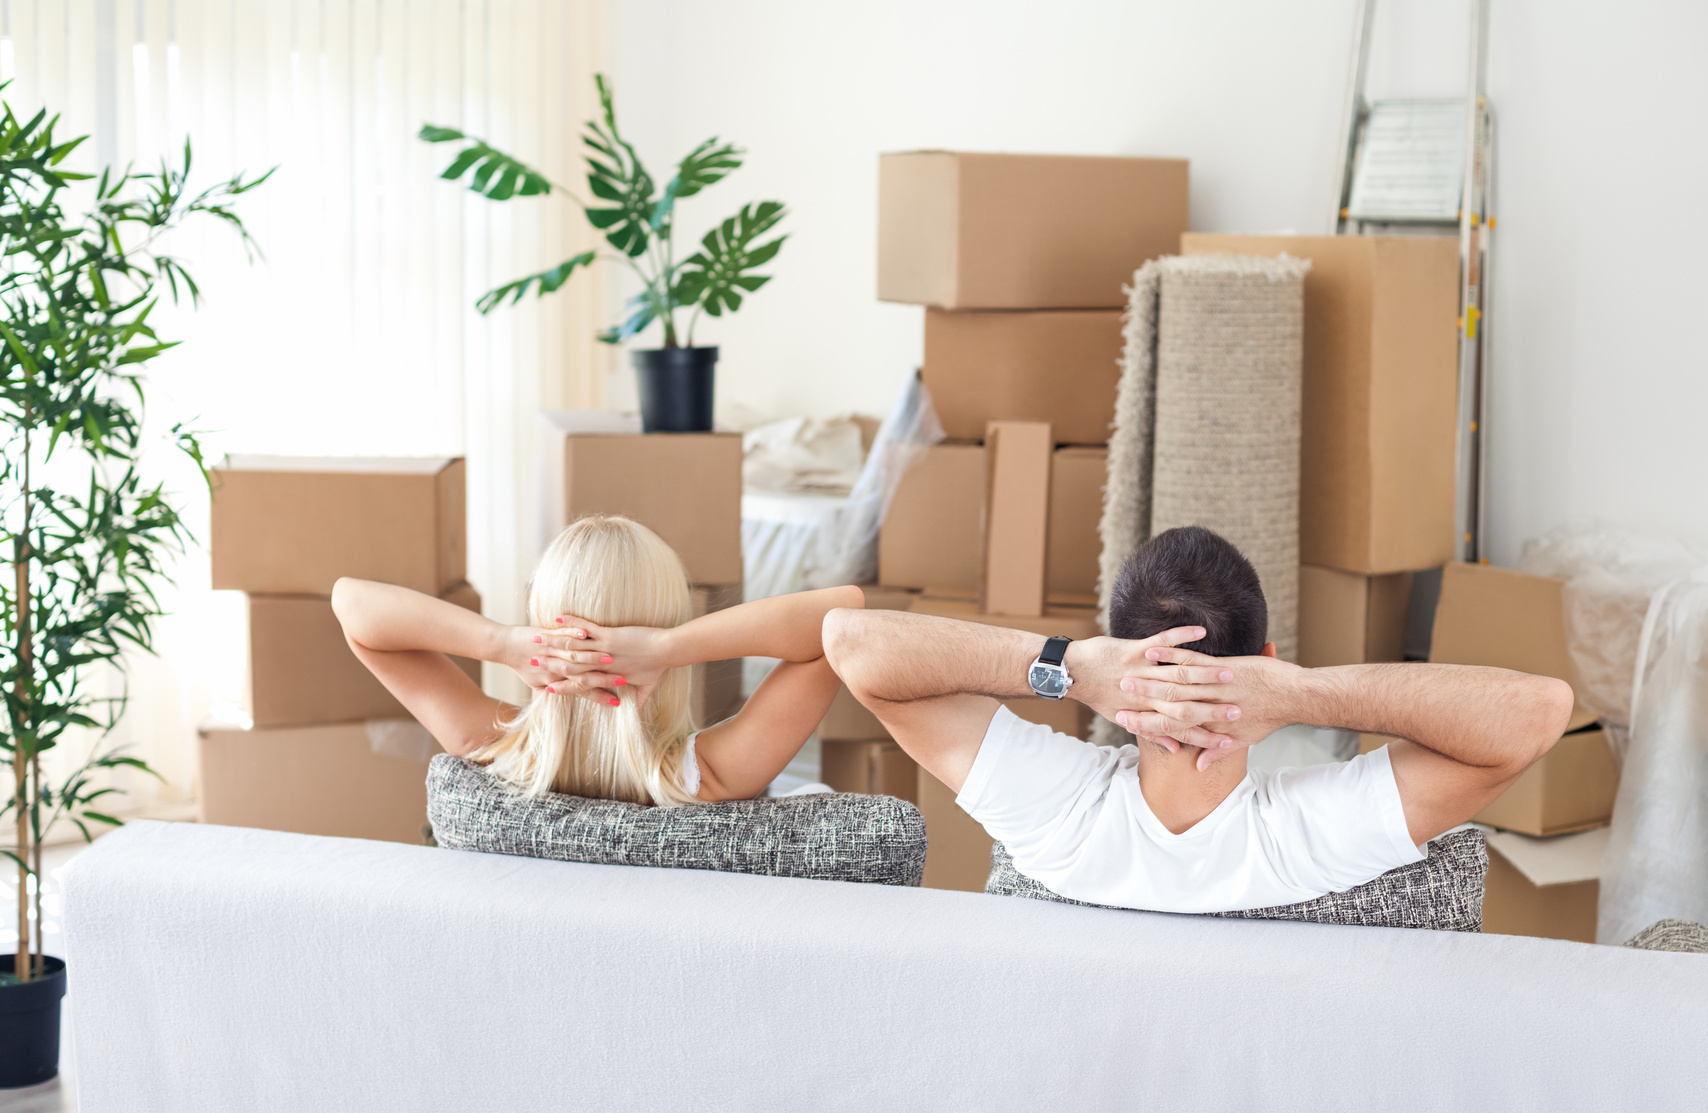 boite déménagement stockage garde meubles